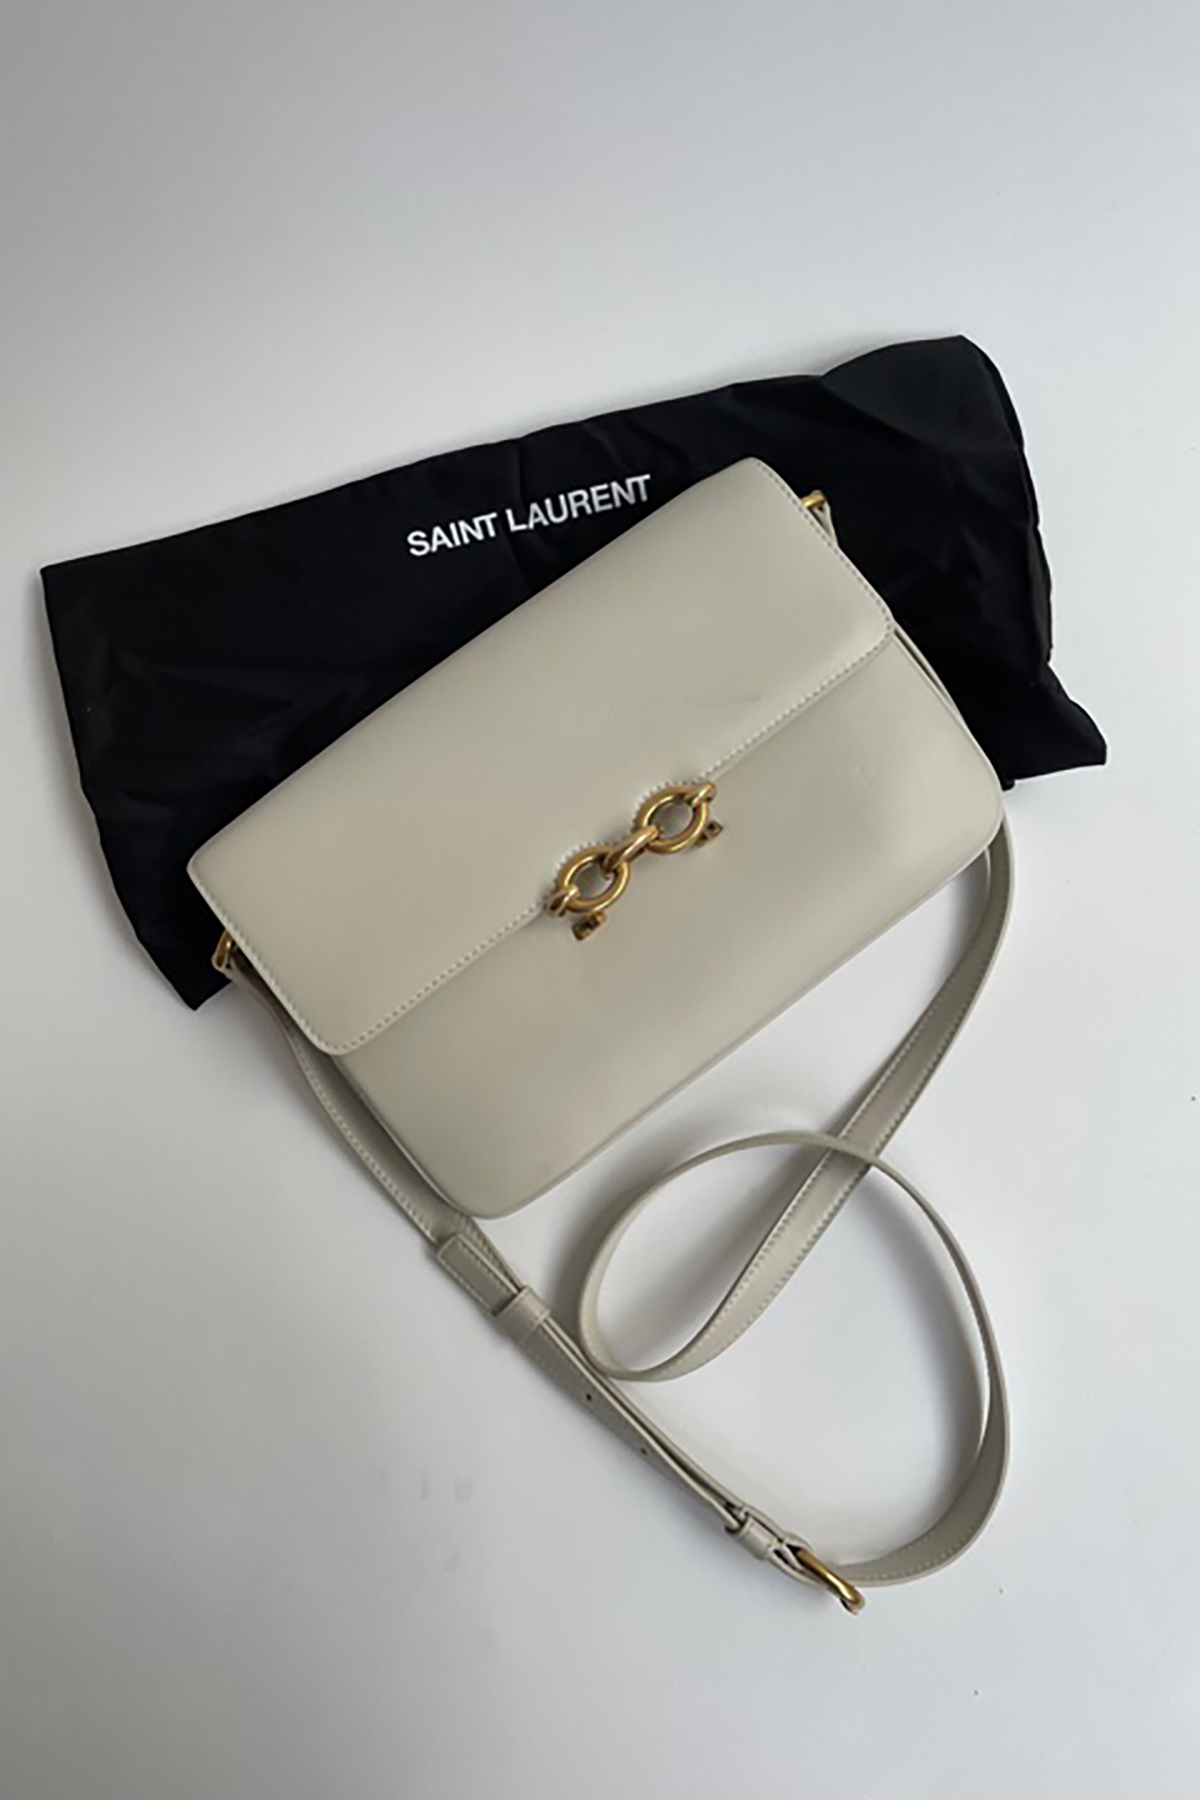 Saint Laurent Bag - Off White With Dustbag